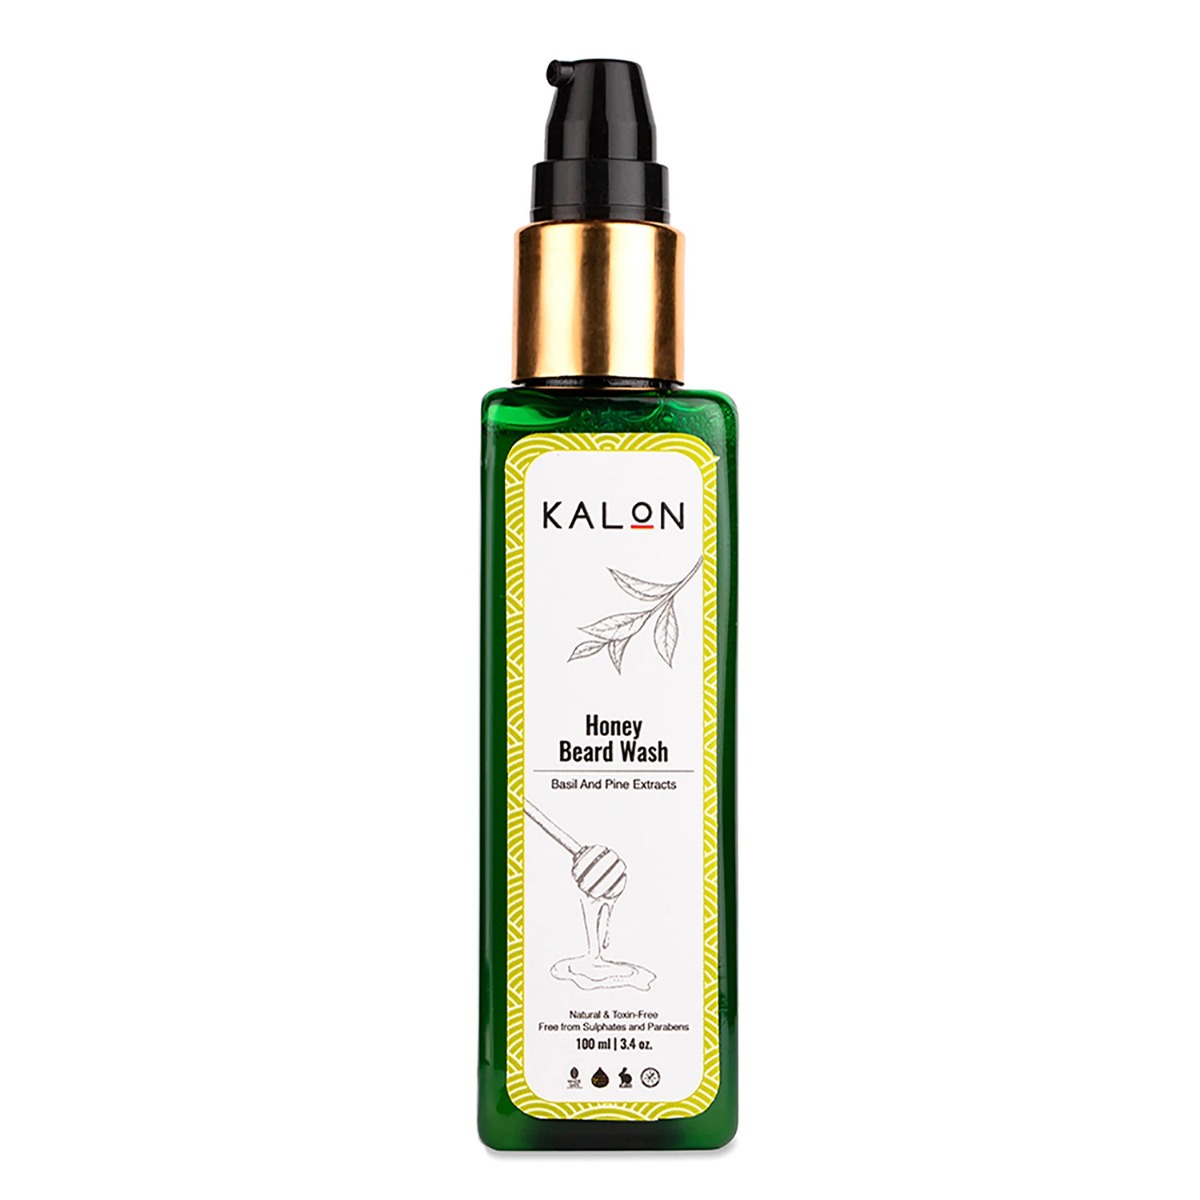 Kalon Natural Basil & Pine Extracts Honey Beard Wash, 100ml